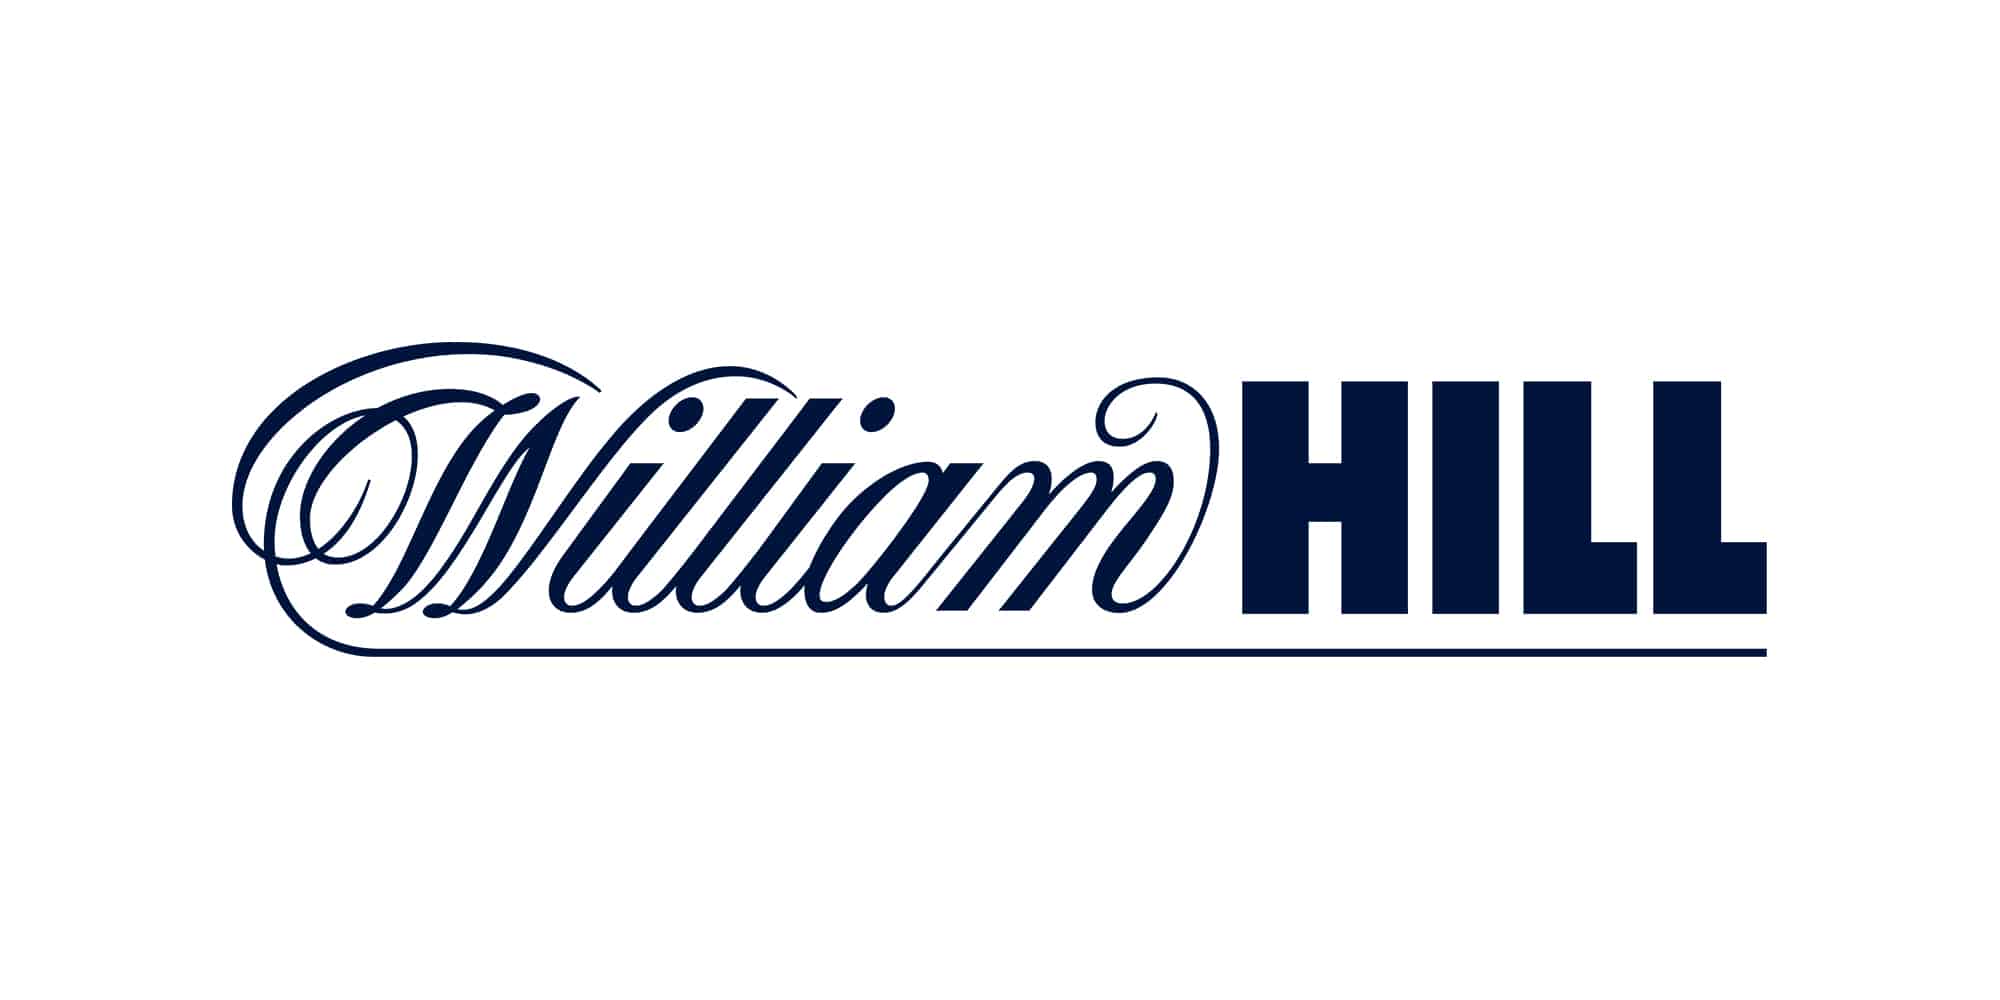 Will hill. William Hill logo. Holly Williams. William Hill букмекерская контора лого. Anthill лого.